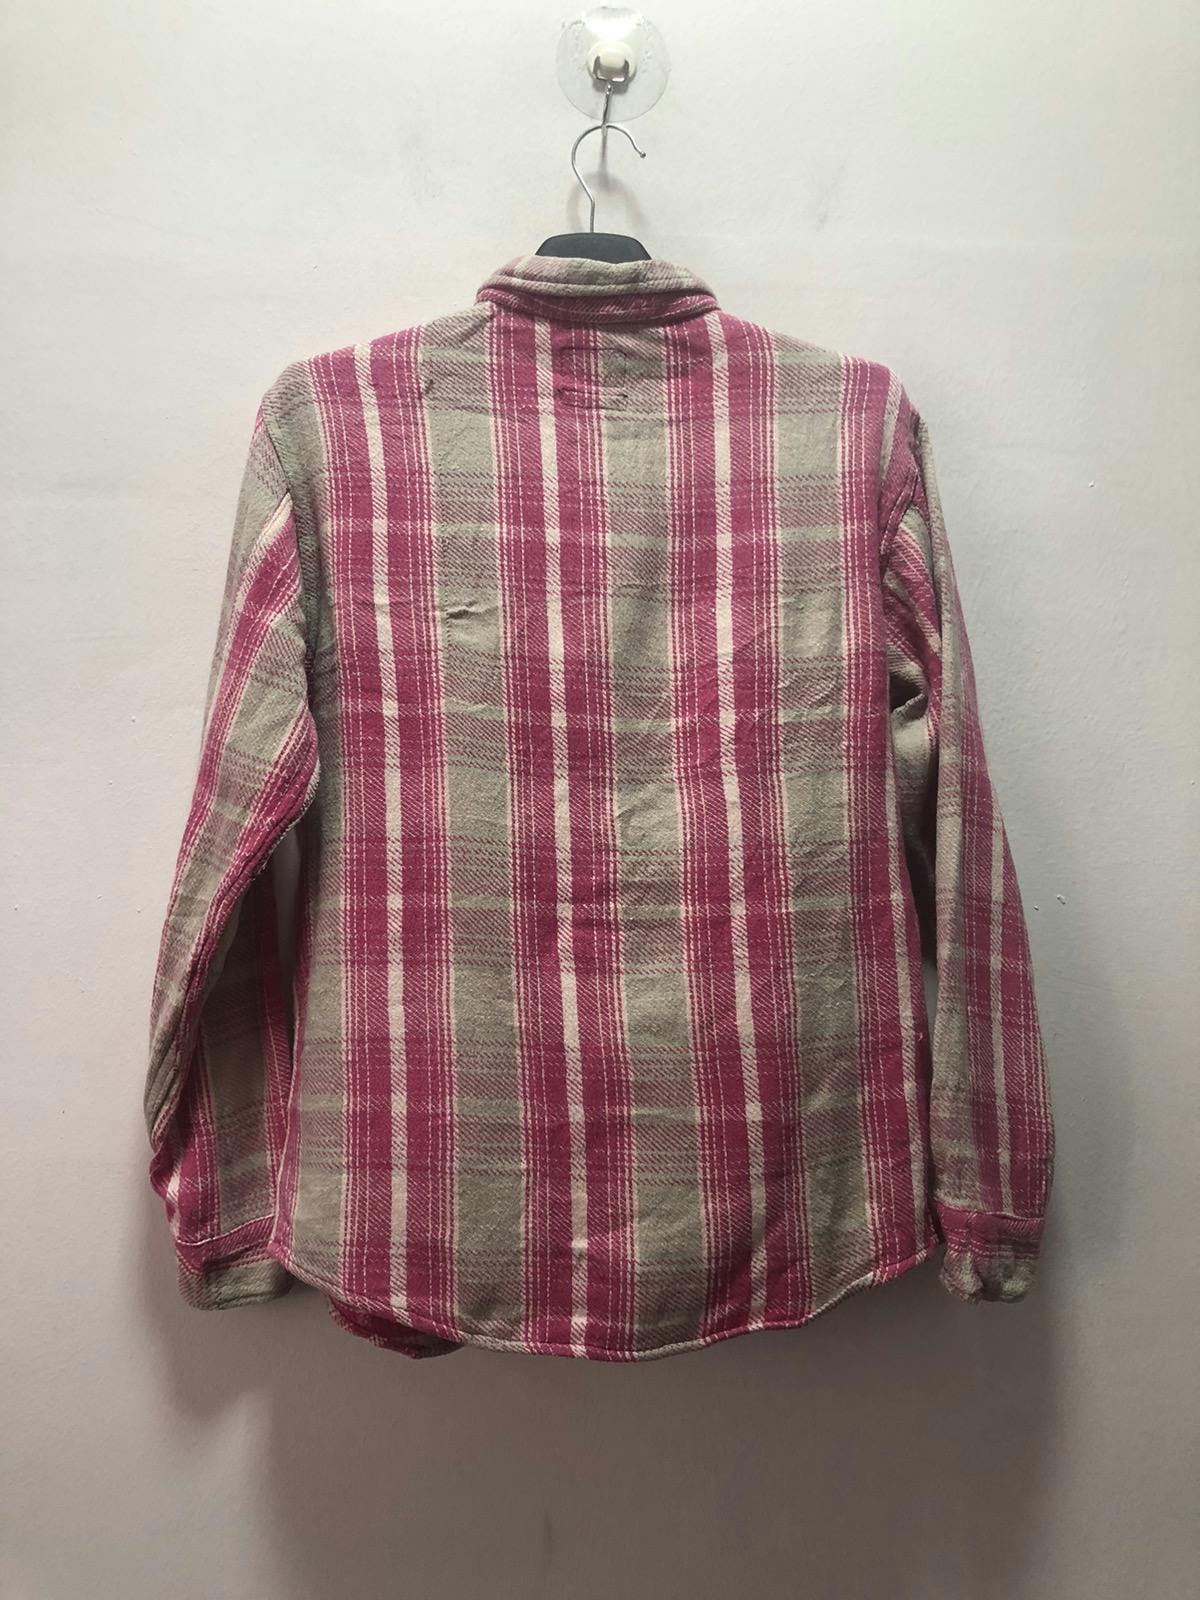 HR MARKET Bombay Bazar Flannel Shirt Japan - 5